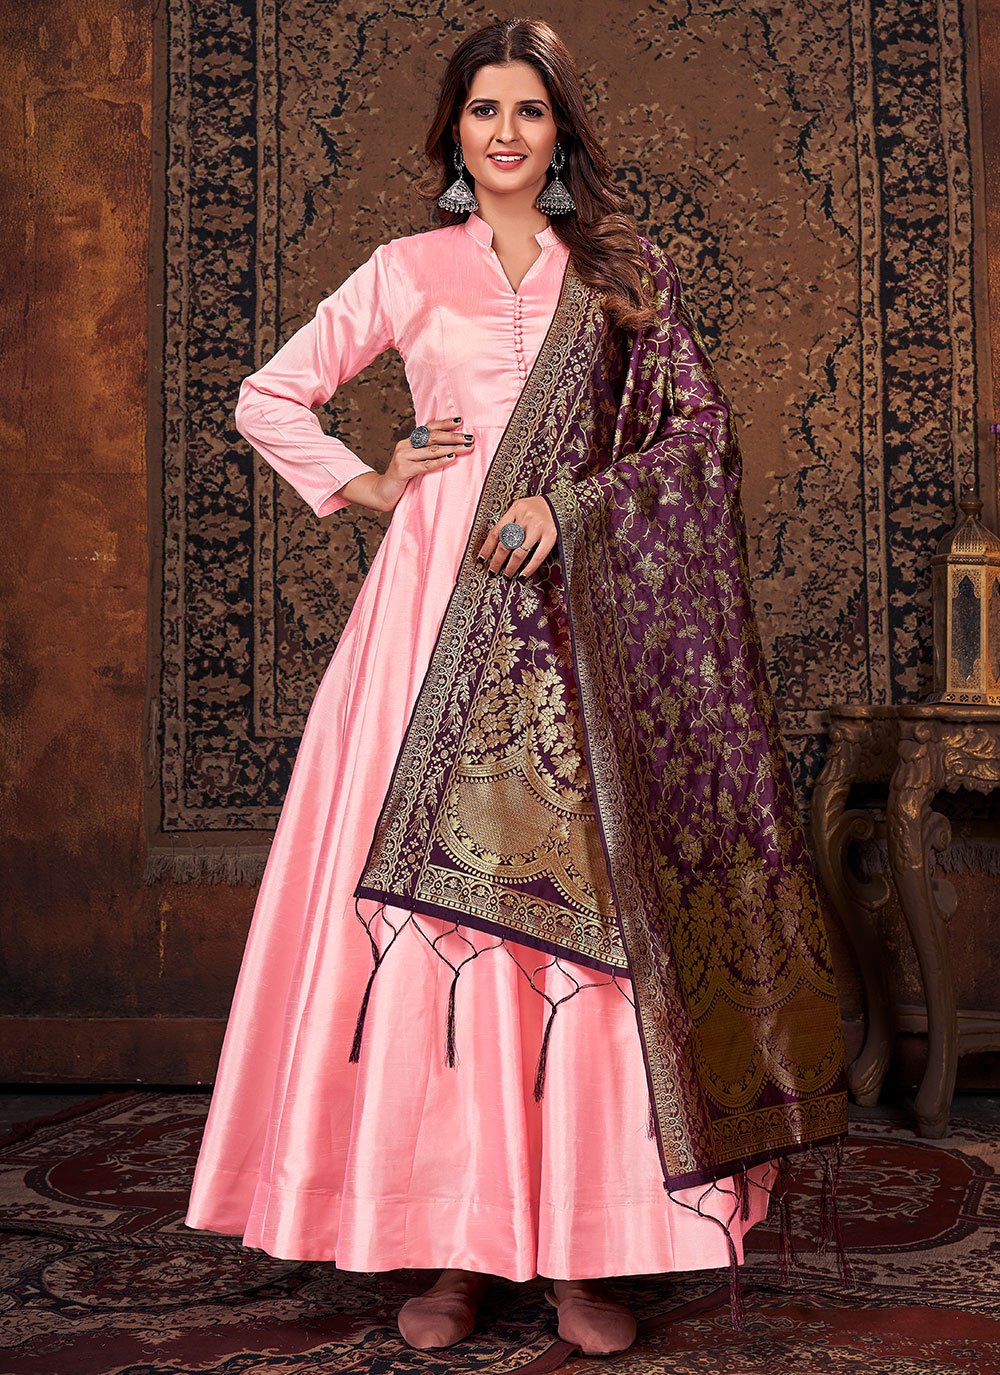 Lace Design On Punjabi Dresses | Punjabi Suit Design collection 2021 -  YouTube